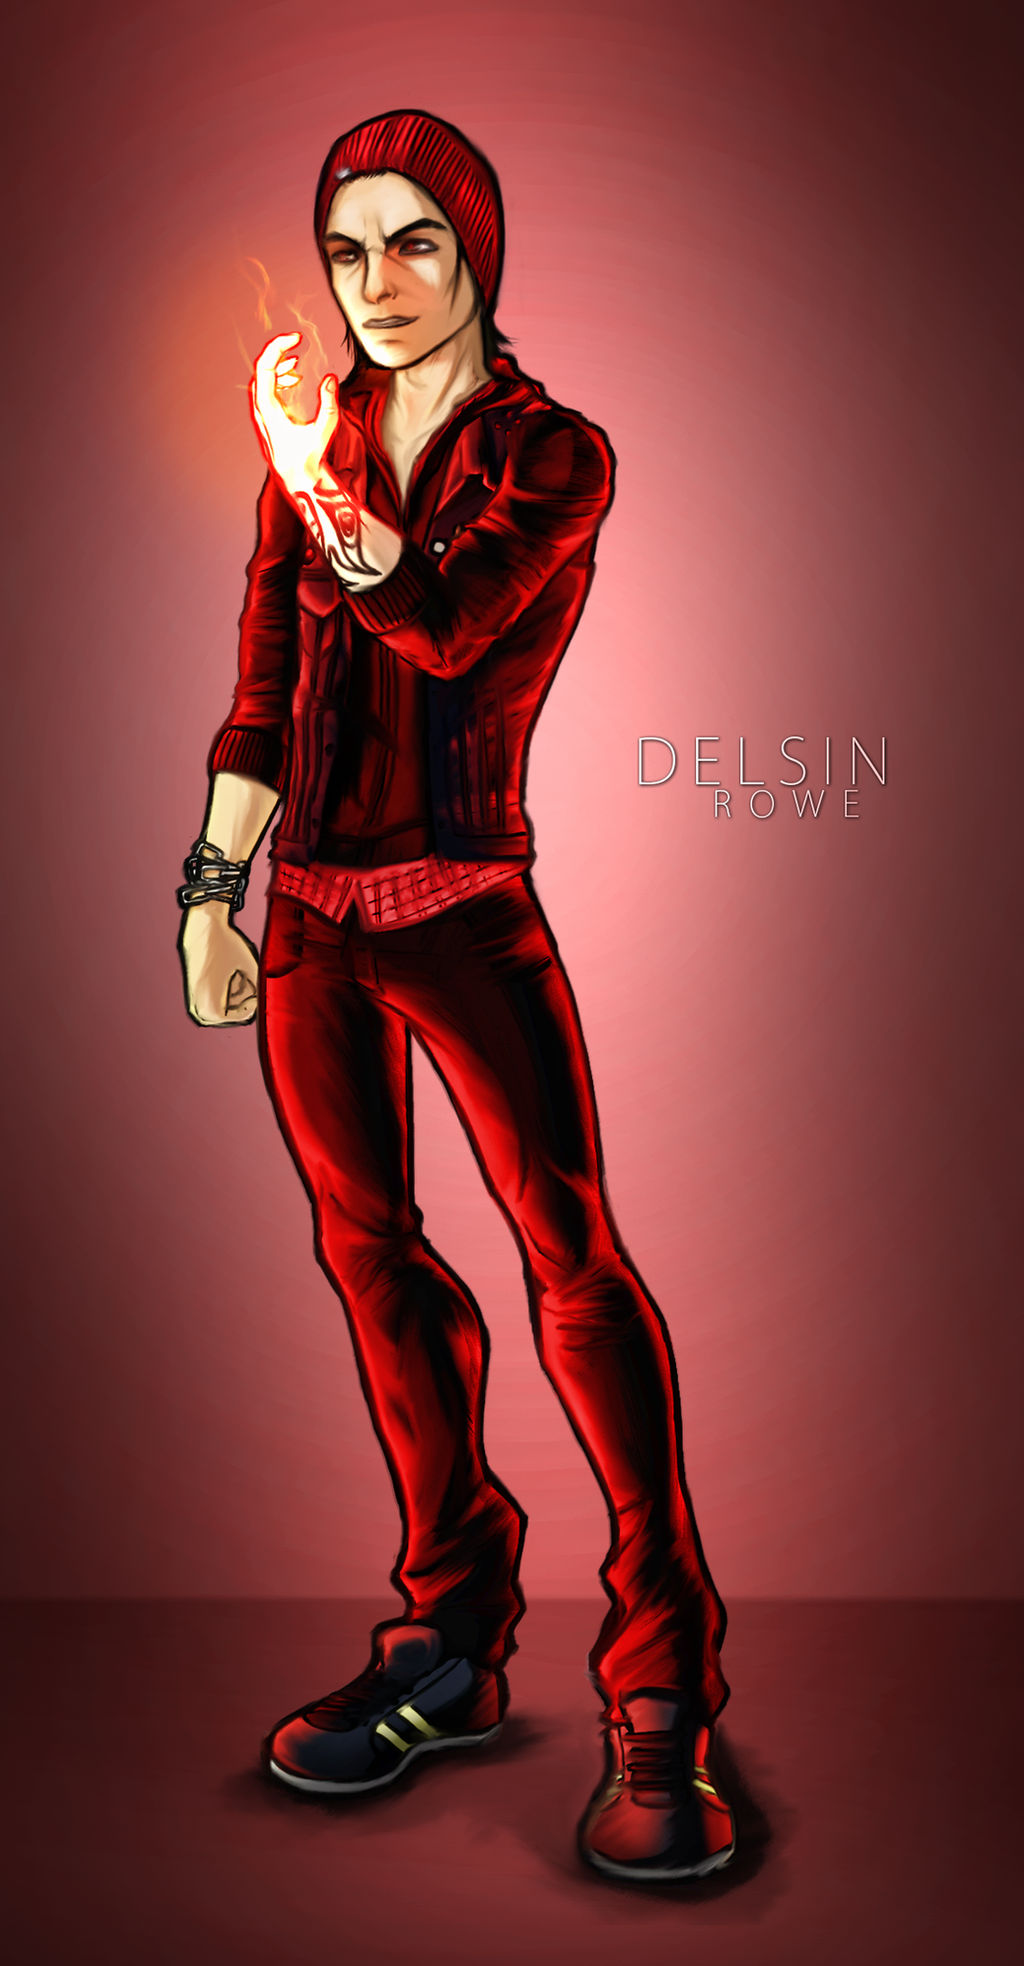 DMC Devil May Cry - Dante ( Full and Final V ) by LitoPerezito on DeviantArt